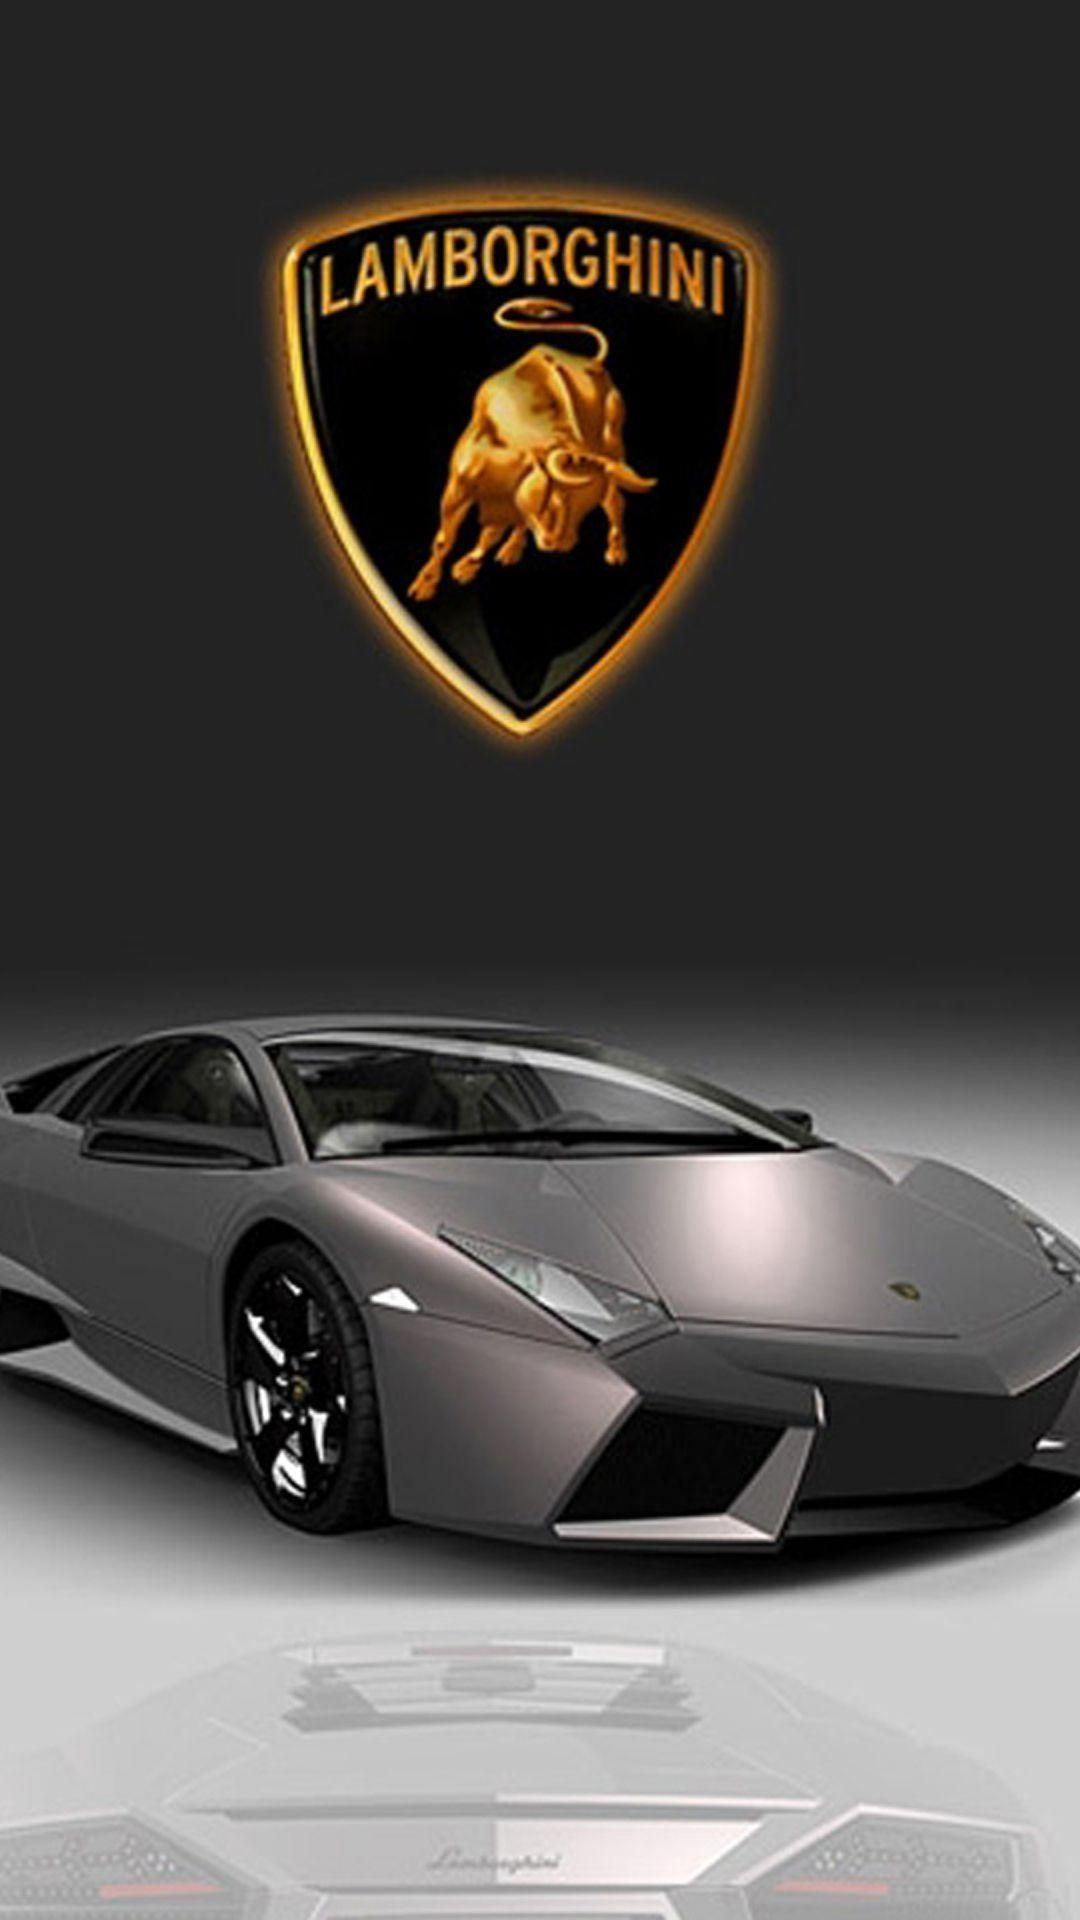 iPhone 6 Plus wallpaper, Lamborghini logo, Fast car appeal, High-speed luxury, 1080x1920 Full HD Handy